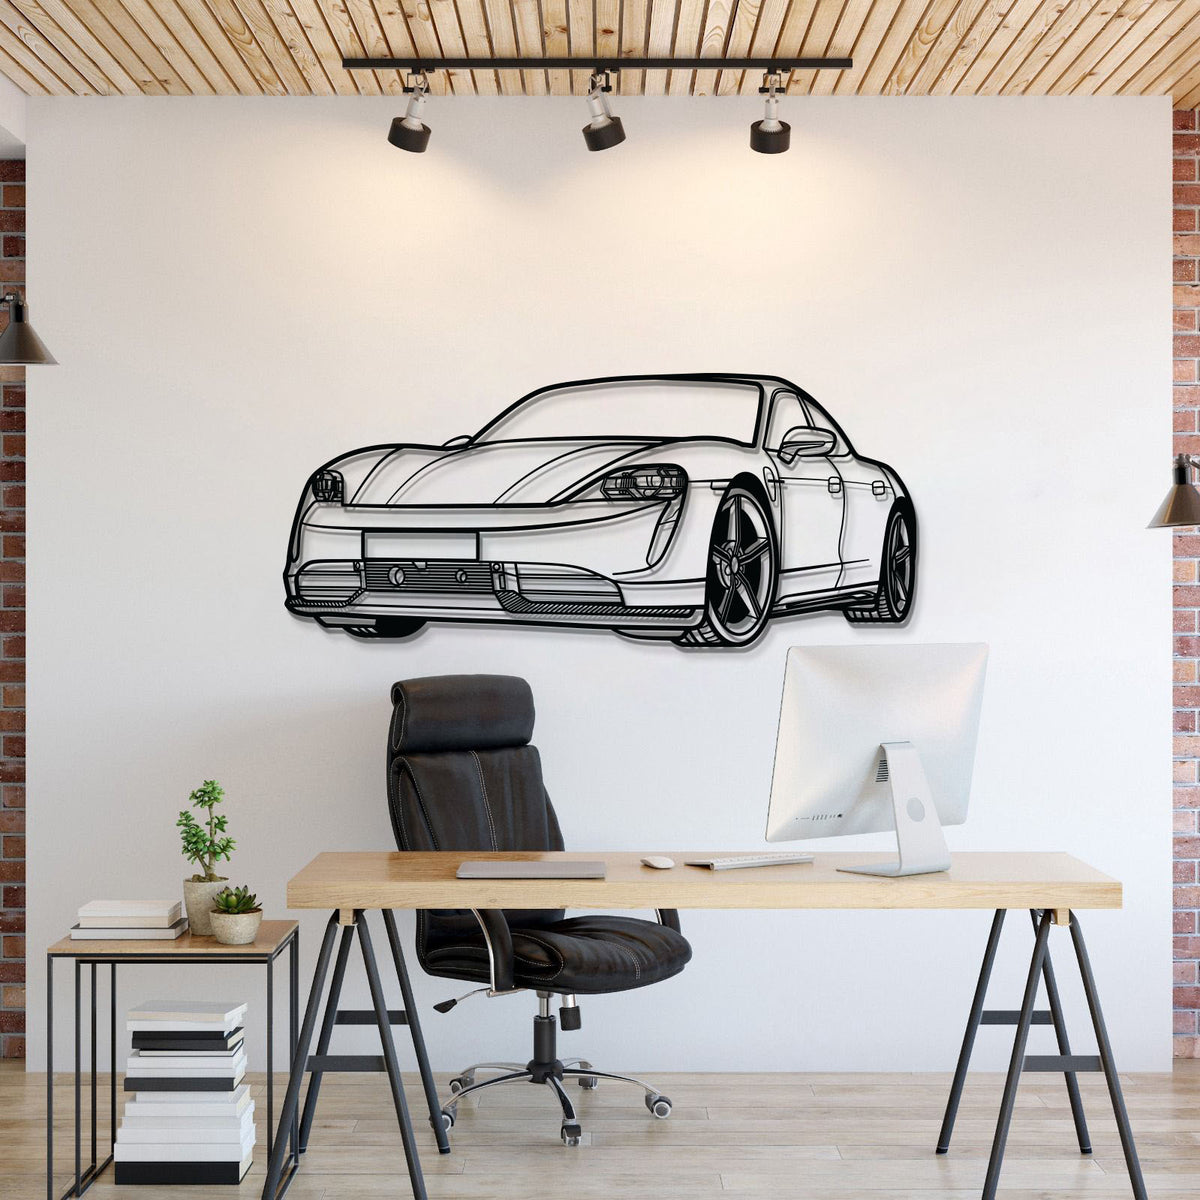 Taycan Perspective Metal Car Wall Art - MT1133